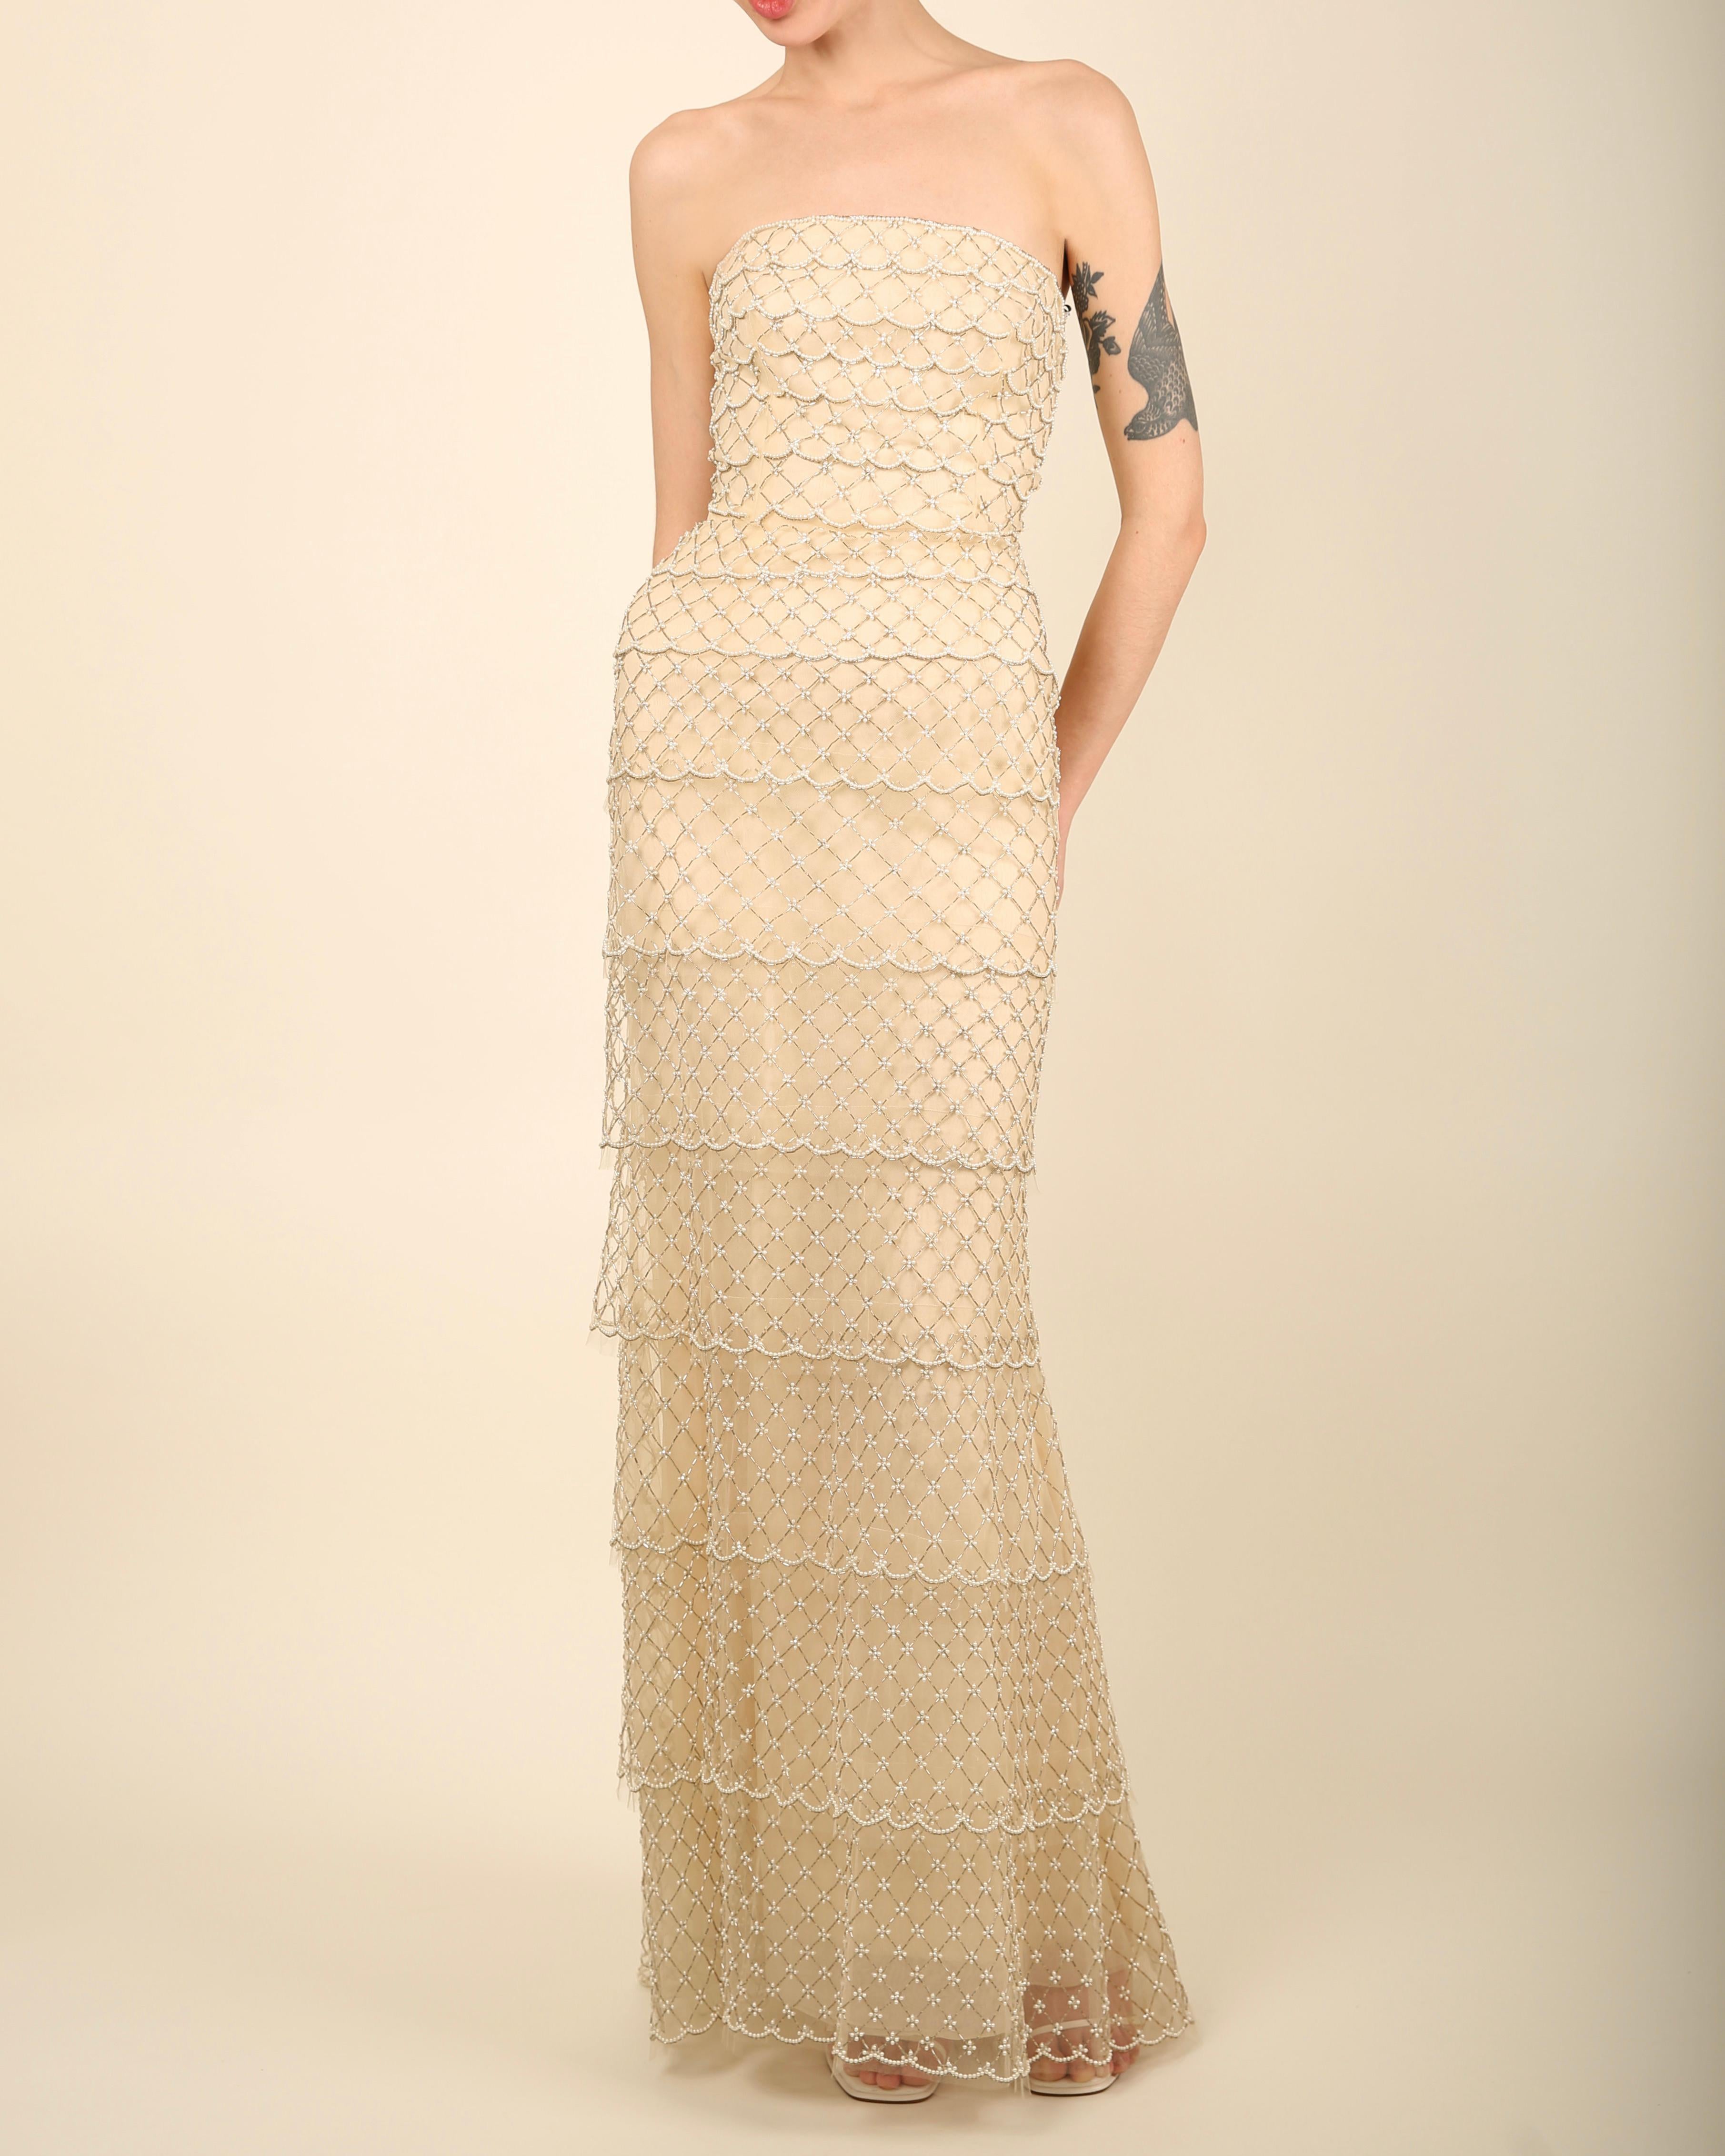 Oscar de la Renta S/S 2014 strapless tiered sheer mesh pearl wedding dress gown 3